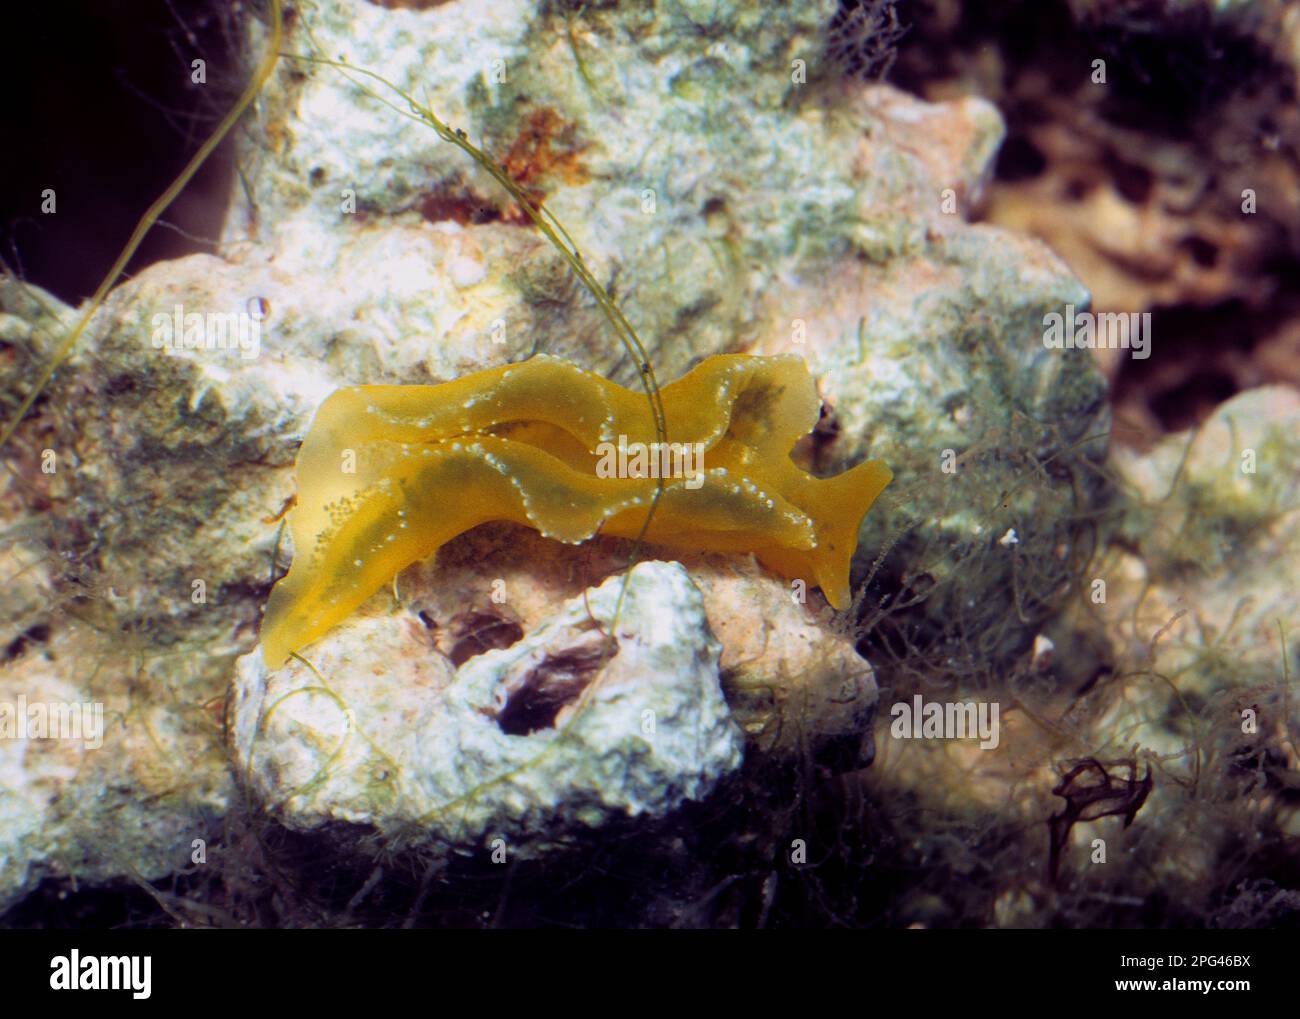 Sea slug Elysia flava it is a mollusk without a shell (opisthobranch) that feeds on algae. Stock Photo